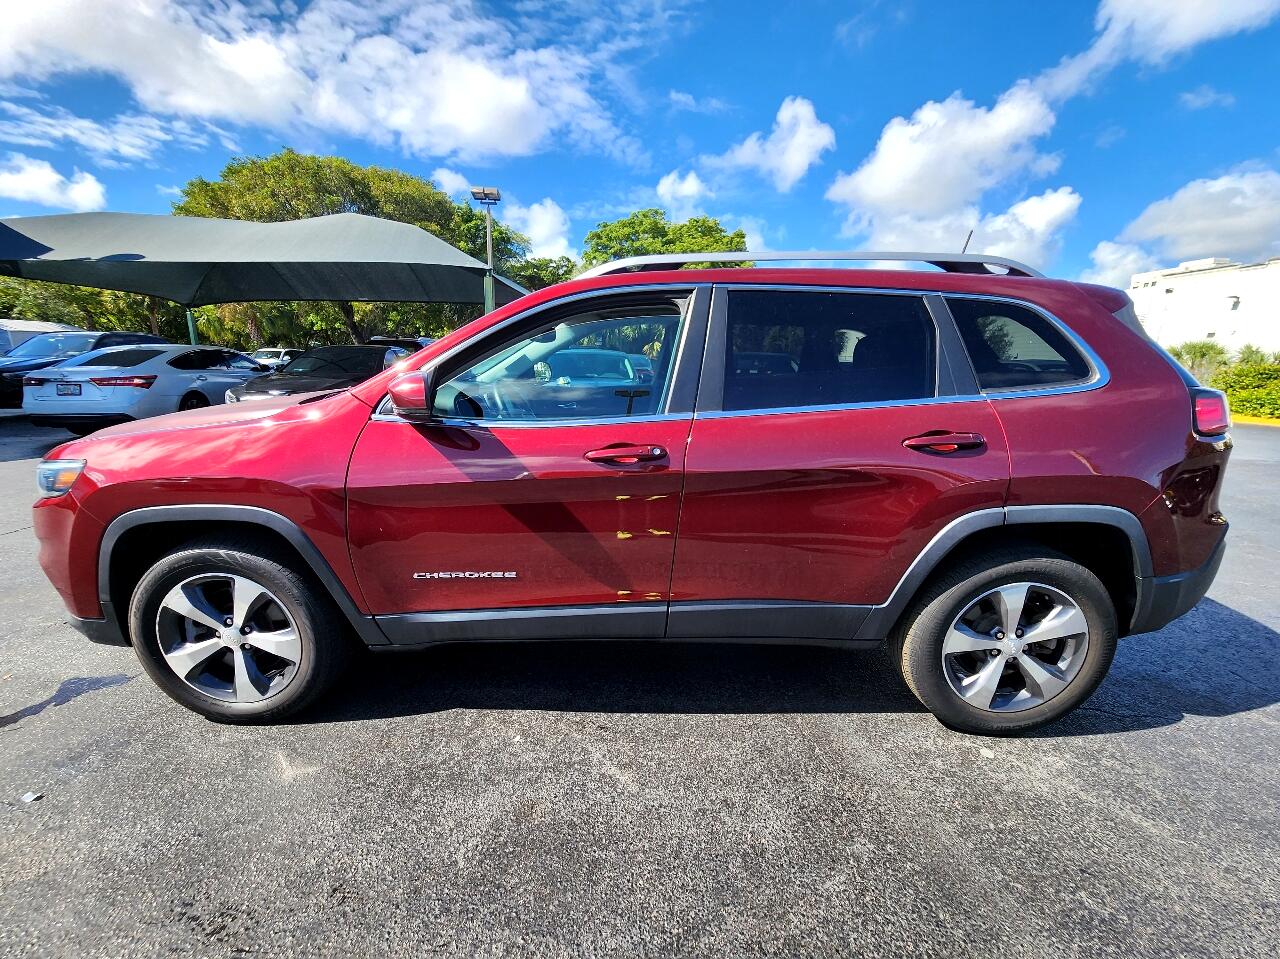 2019 JEEP Cherokee SUV / Crossover - $19,999